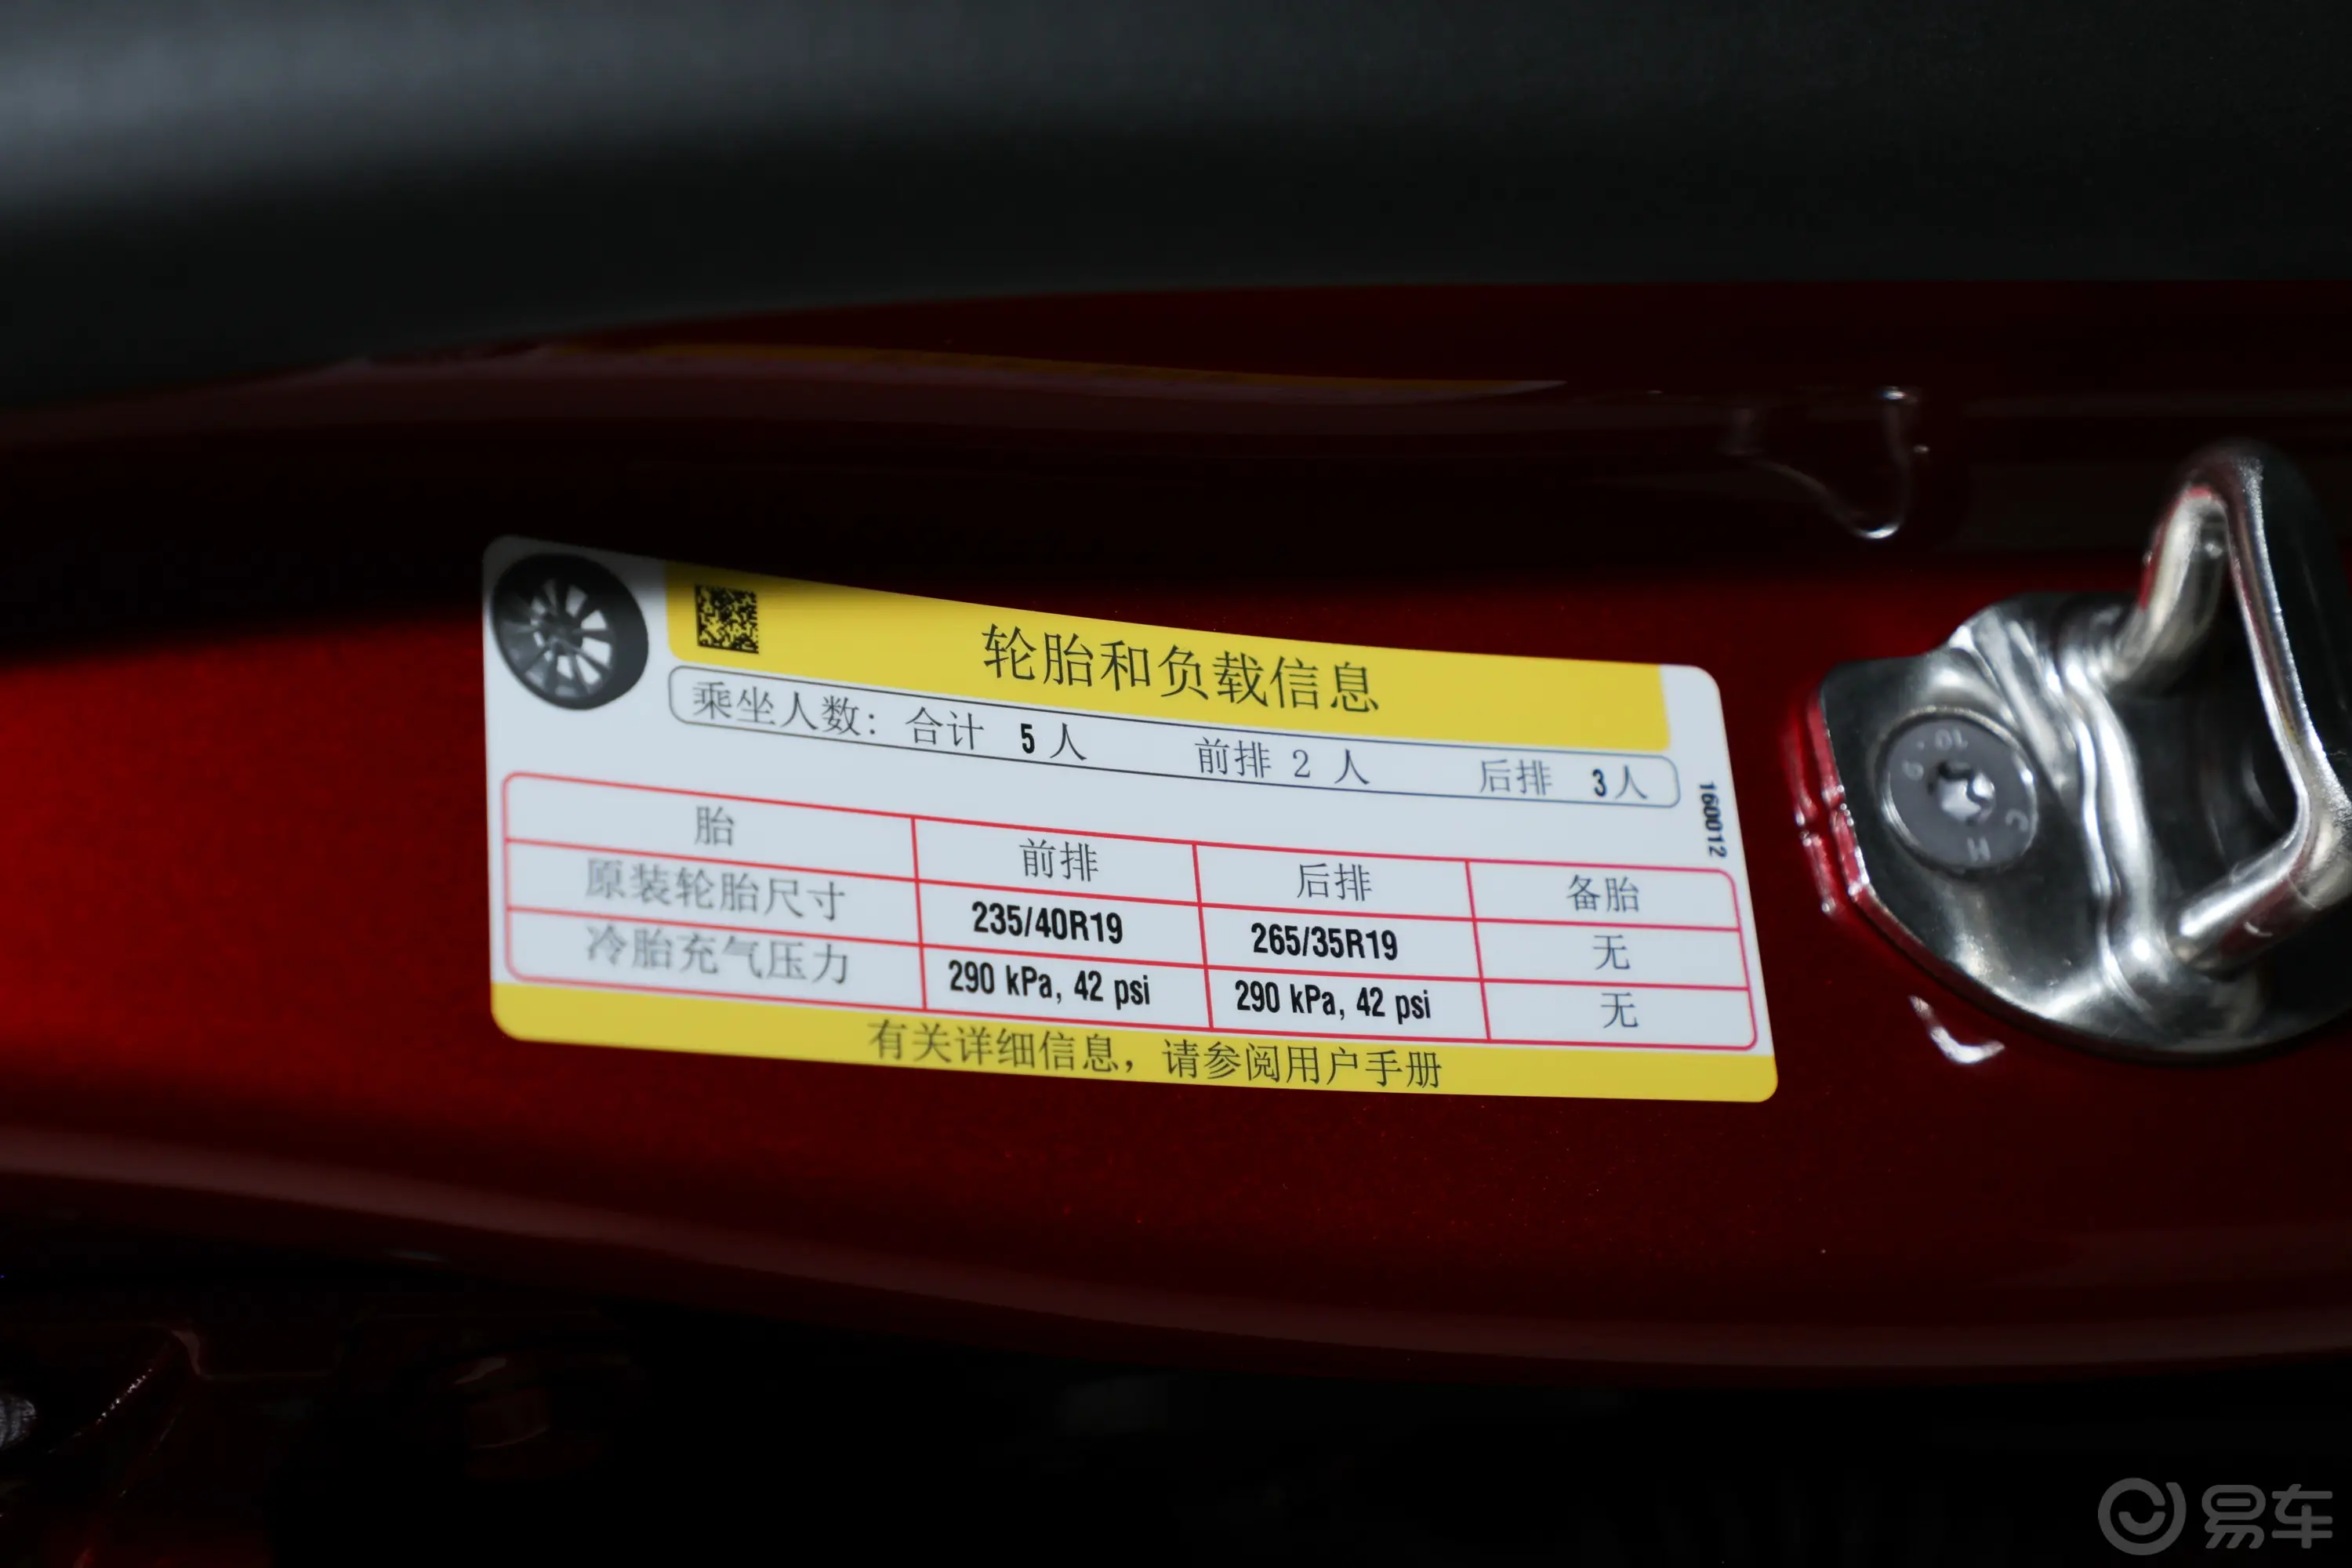 Model 3623km Performance高性能全轮驱动版胎压信息铭牌